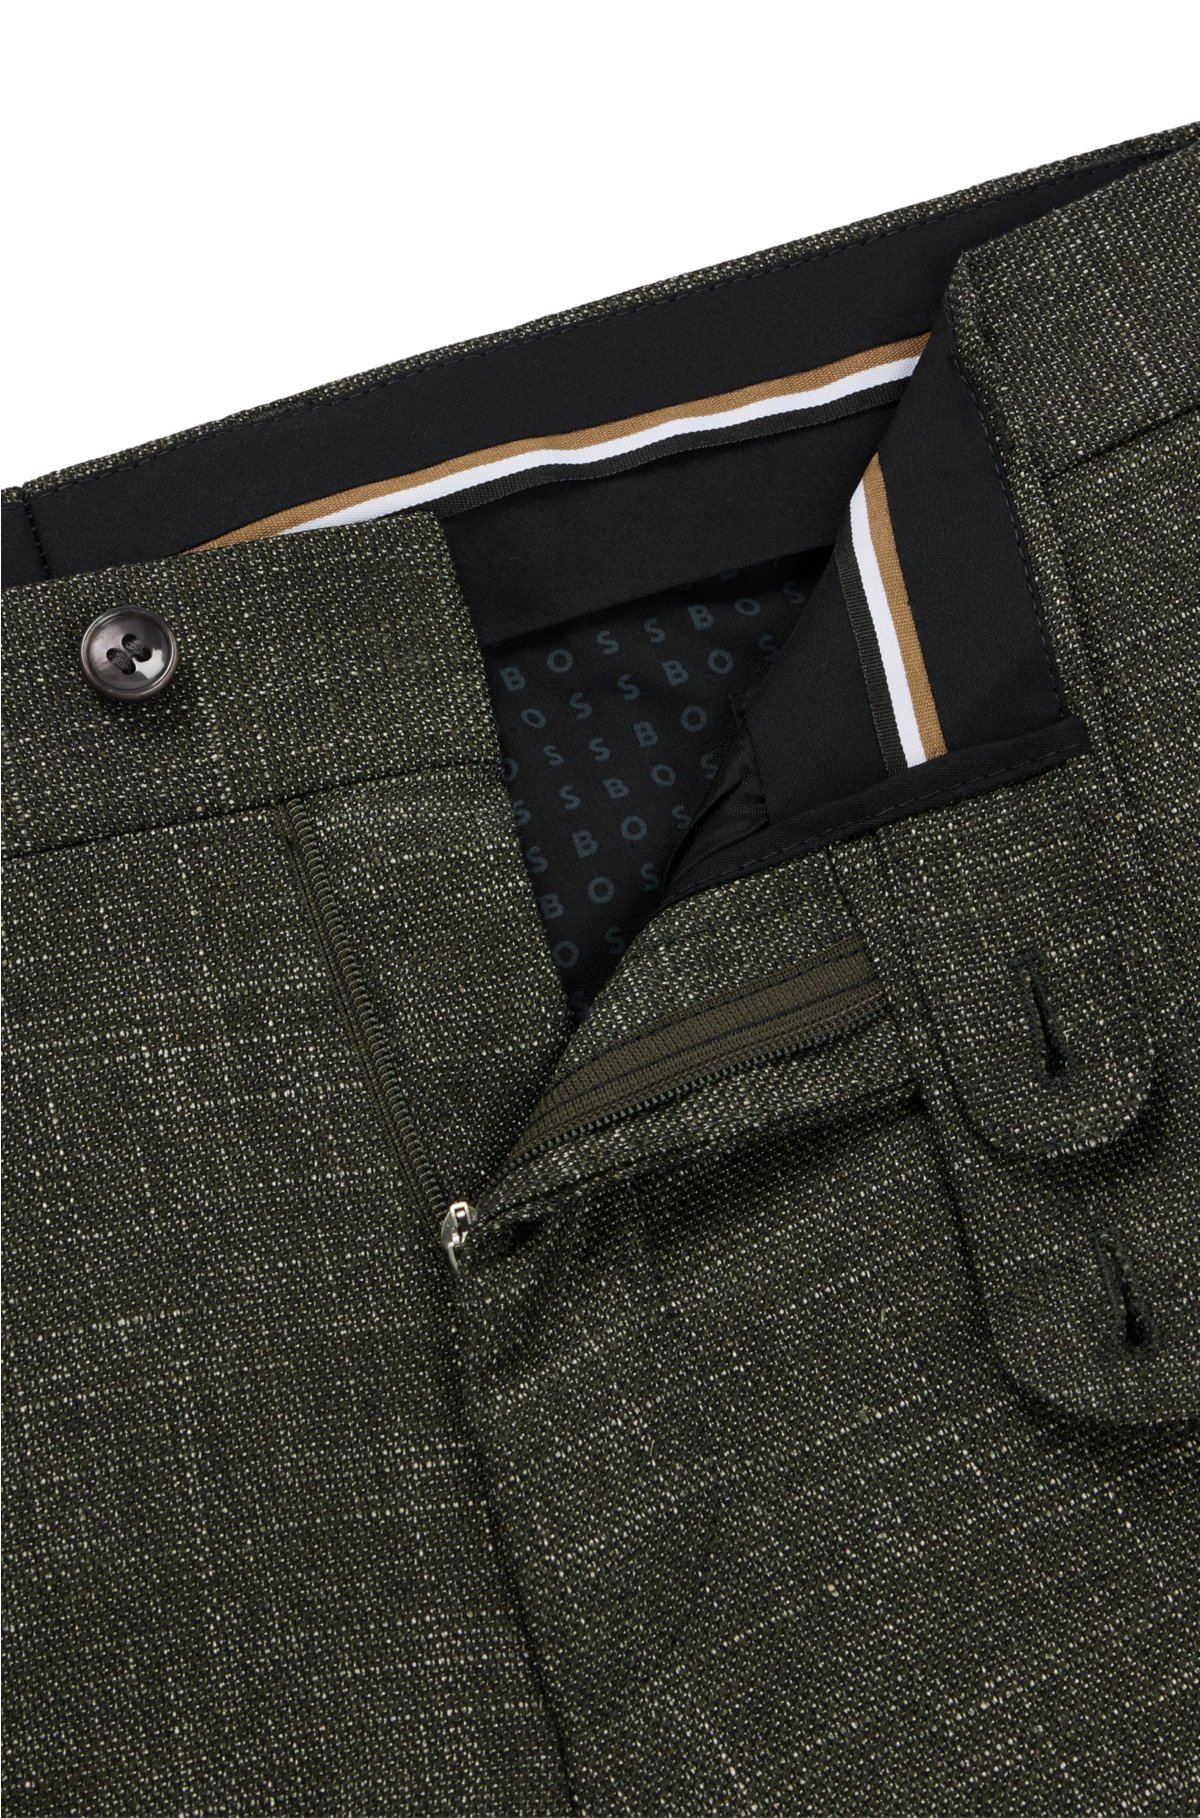 Slim-fit trousers in a patterned wool blend, Dark Green